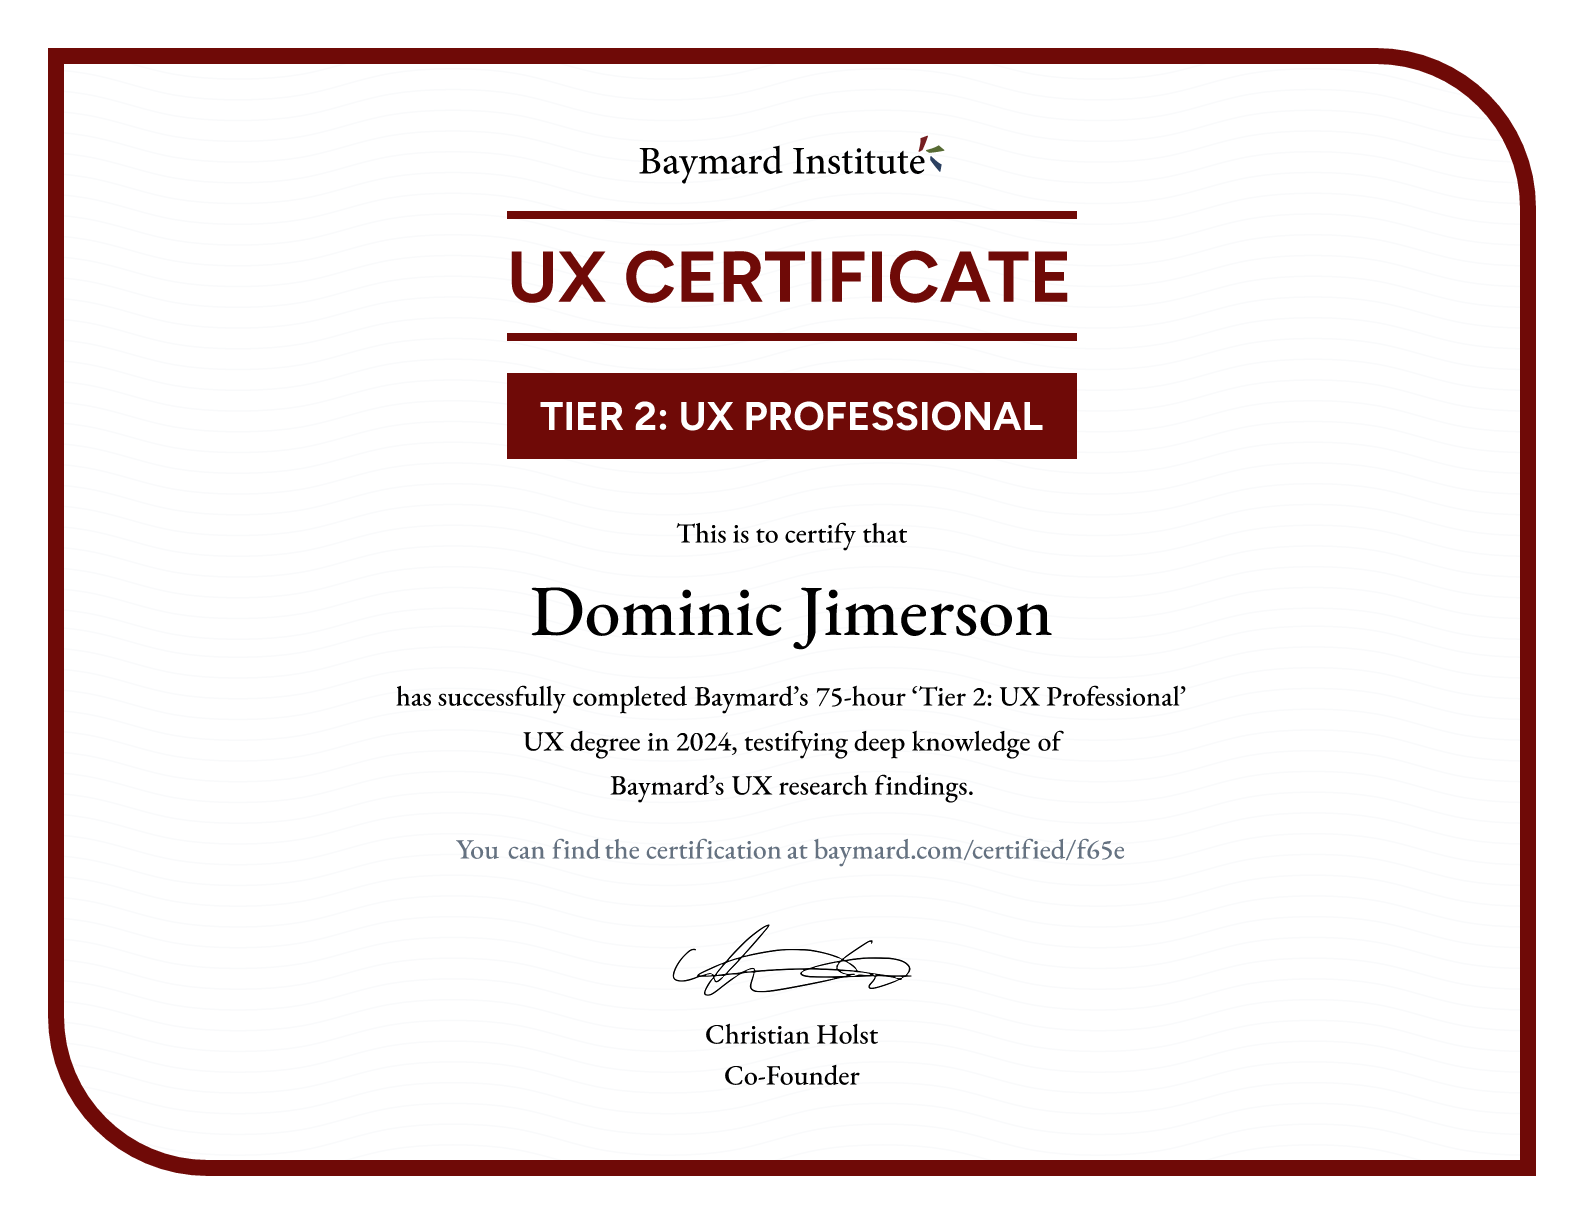 Dominic Jimerson’s certificate